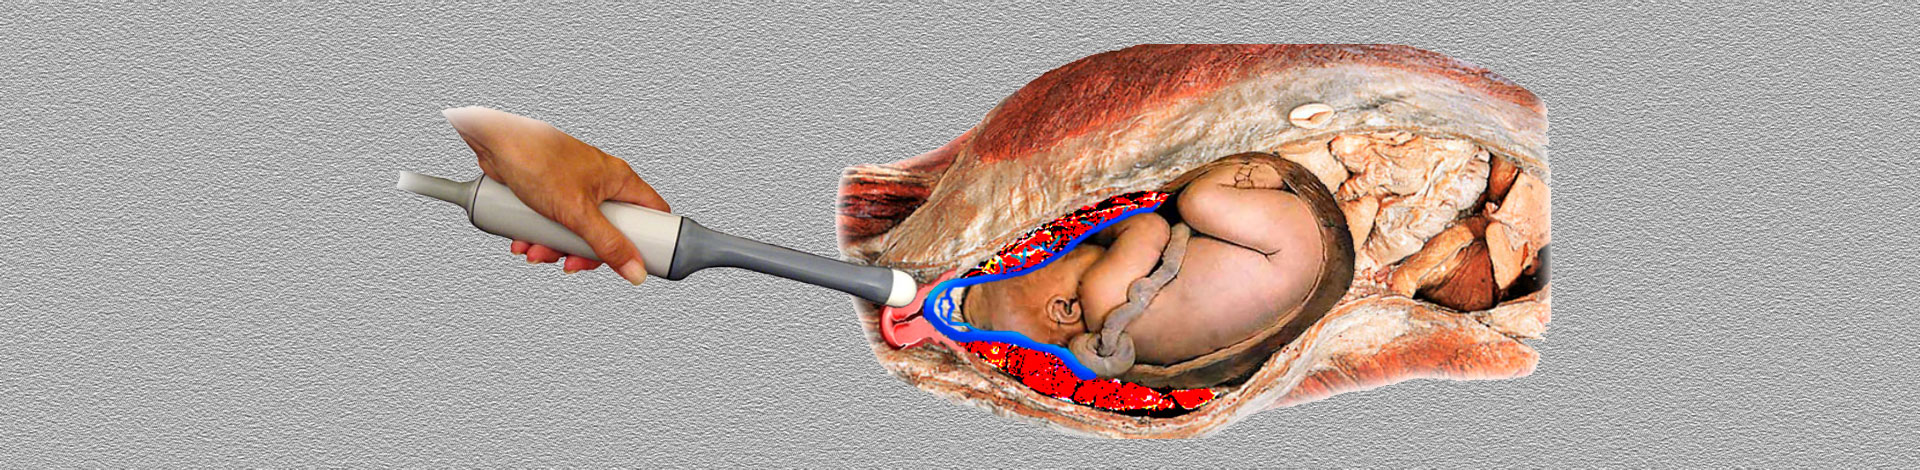 Transvaginal Scan (TVS) in  Fetal Medicine: Recording